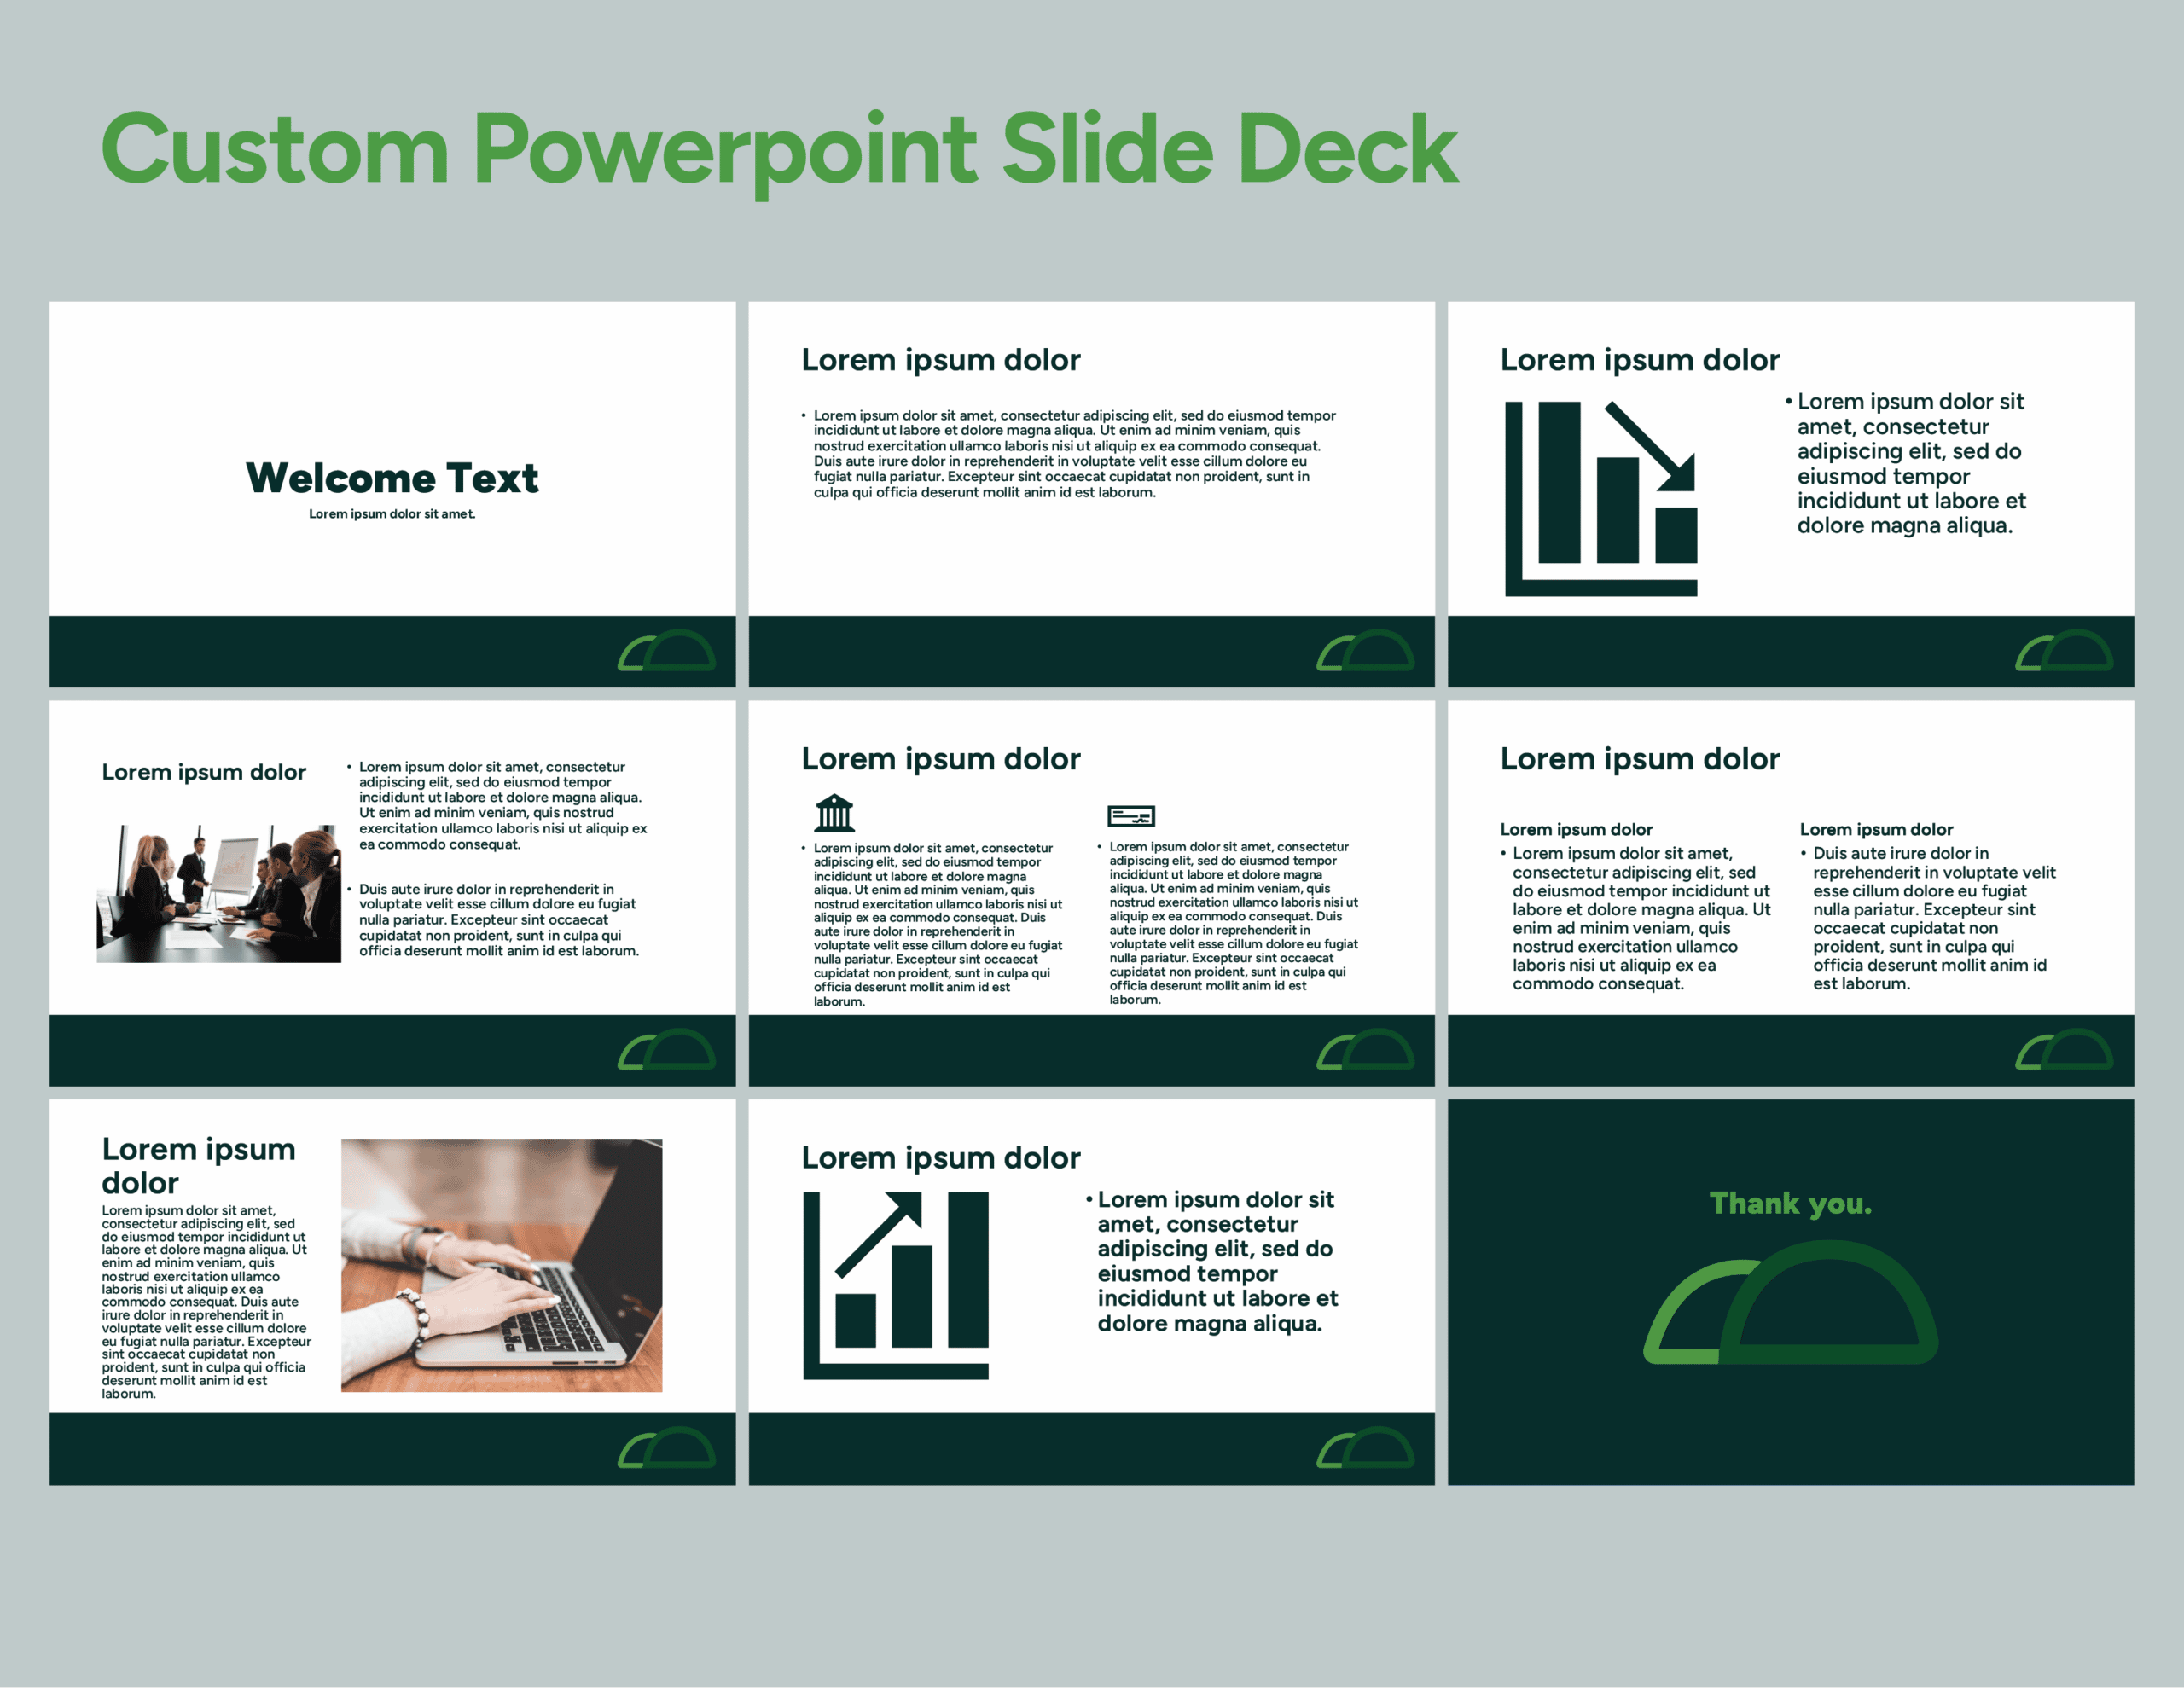 05 - Custom Powerpoint Slide Deck (2)